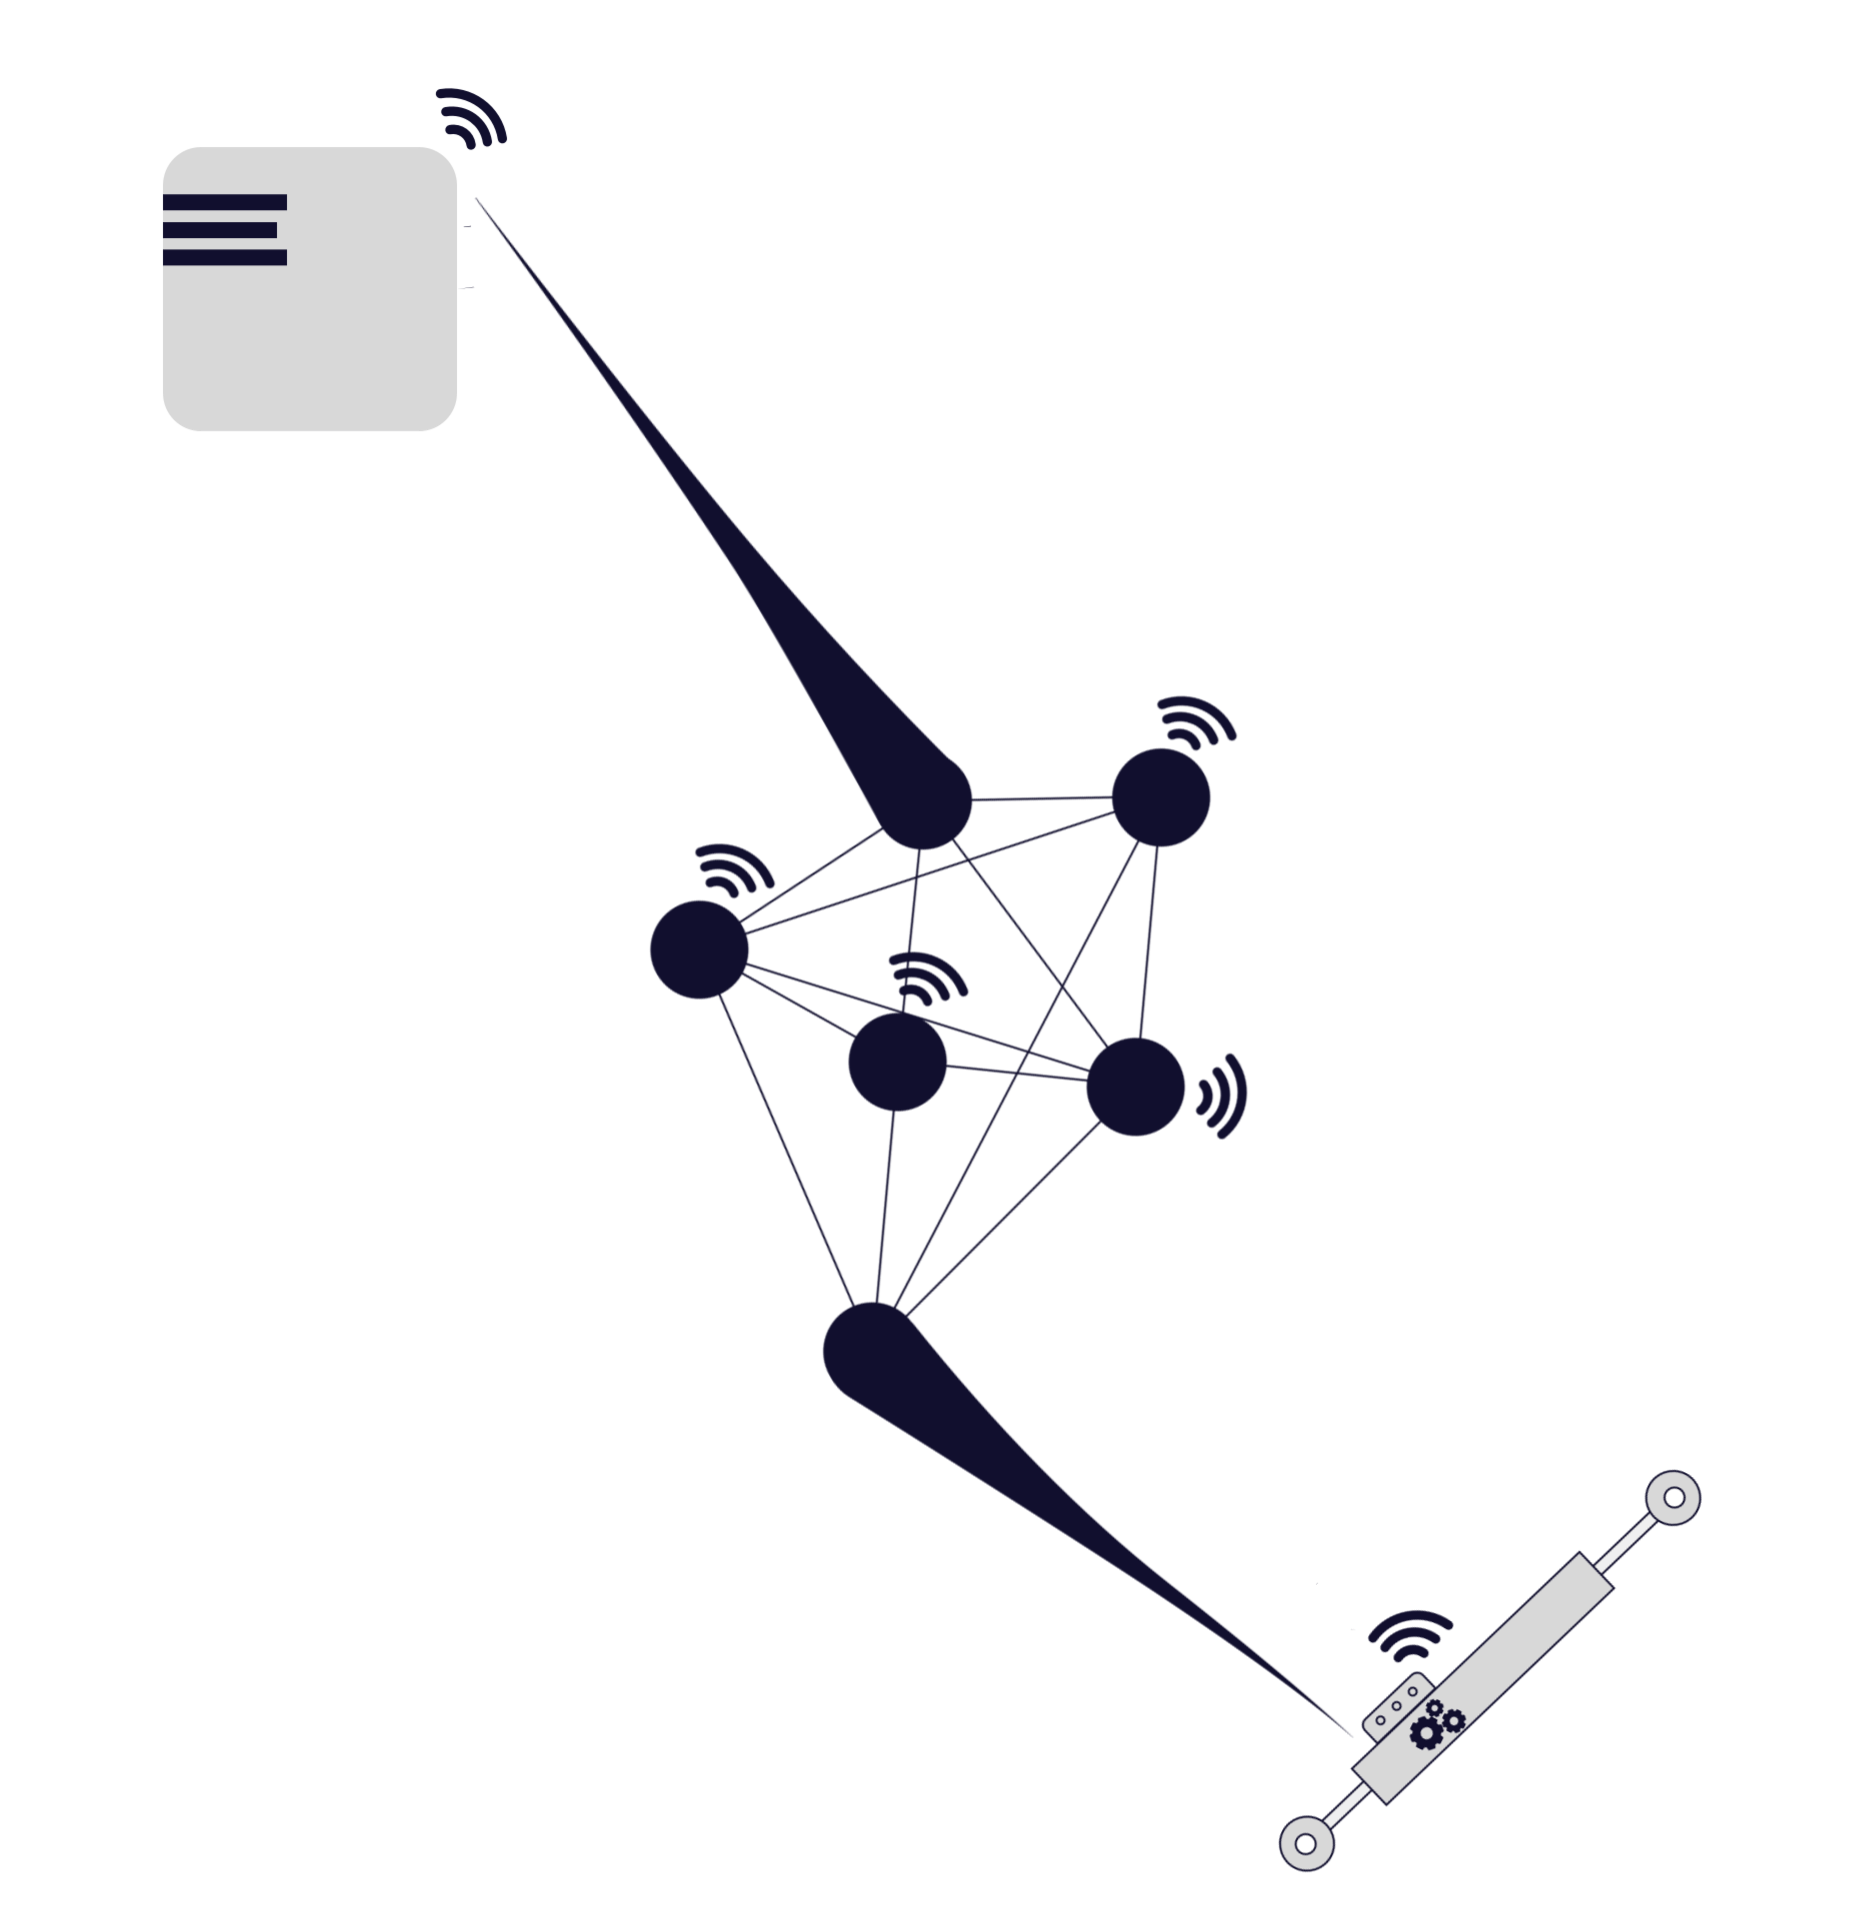 Sensor - Network - Actuator